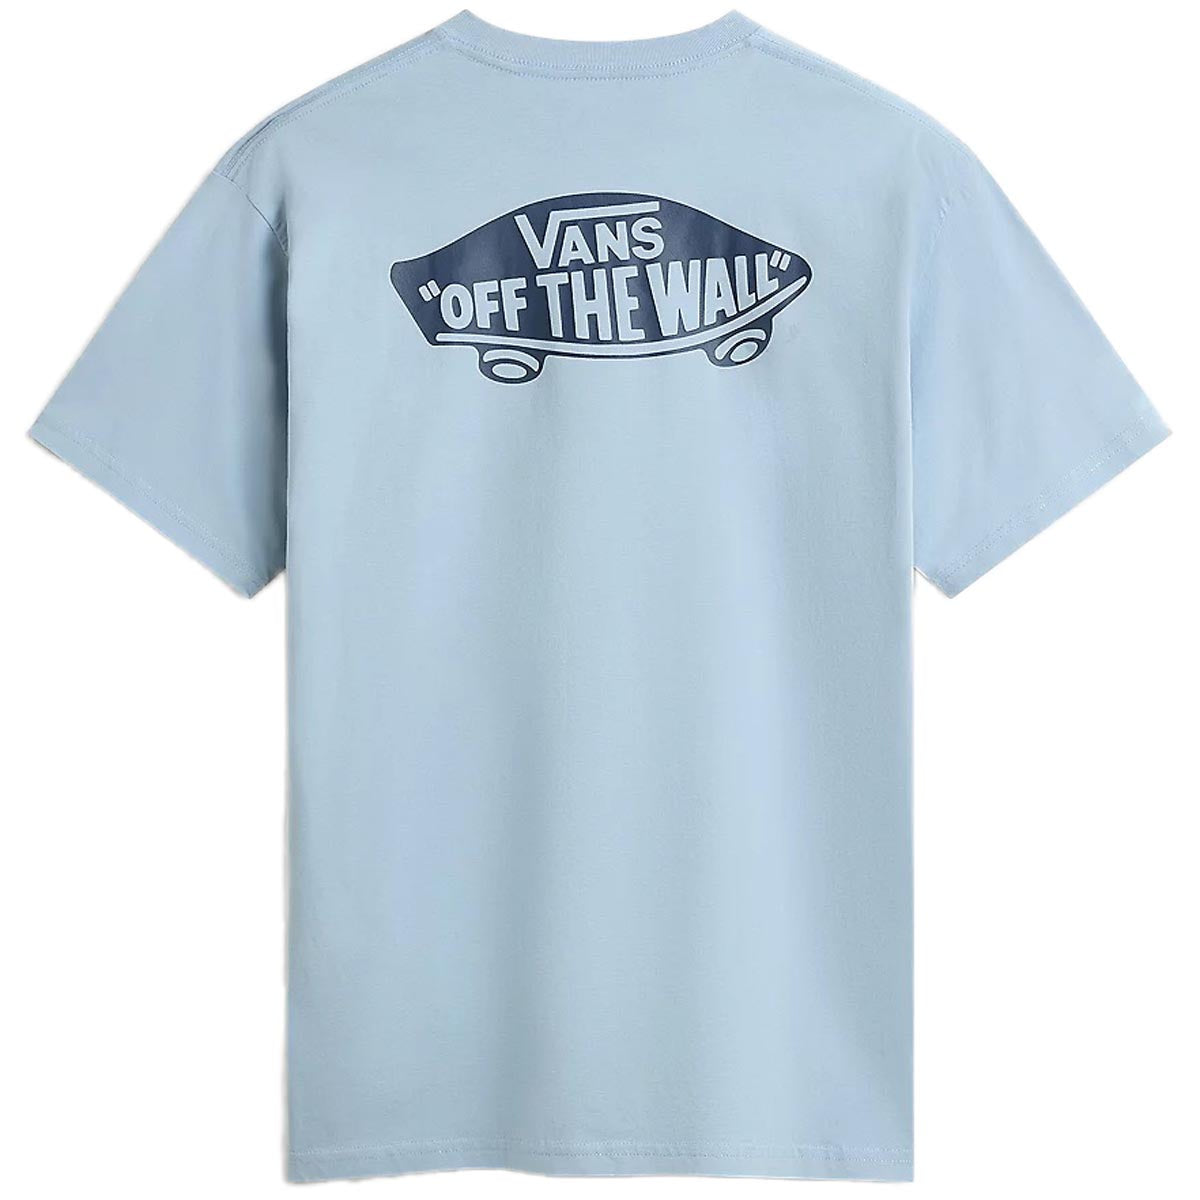 Vans Style 76 Back T-Shirt - Dusty Blue/Dress Blues image 2